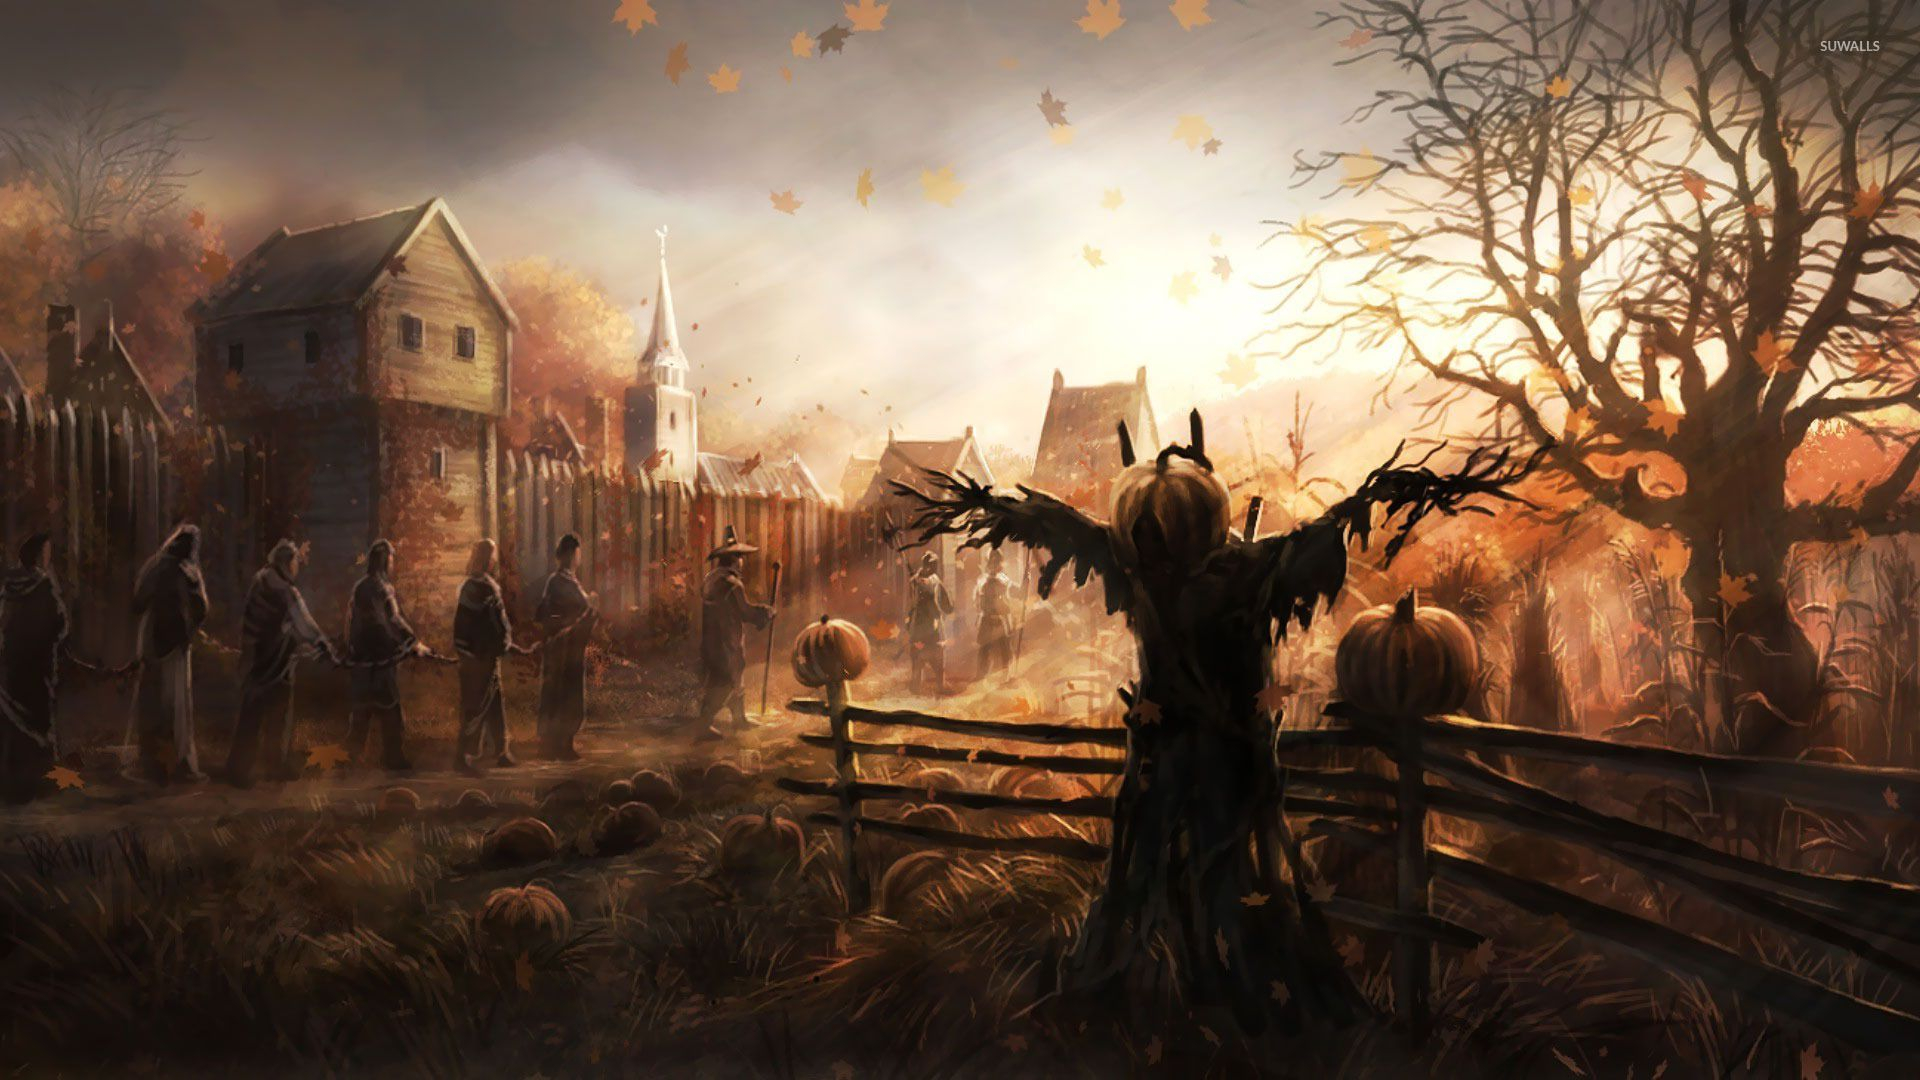 1920x1080 Pin by Sean on Nightmares; Within Us All | Halloween artwork, Scarecrow, Dark fantasy art